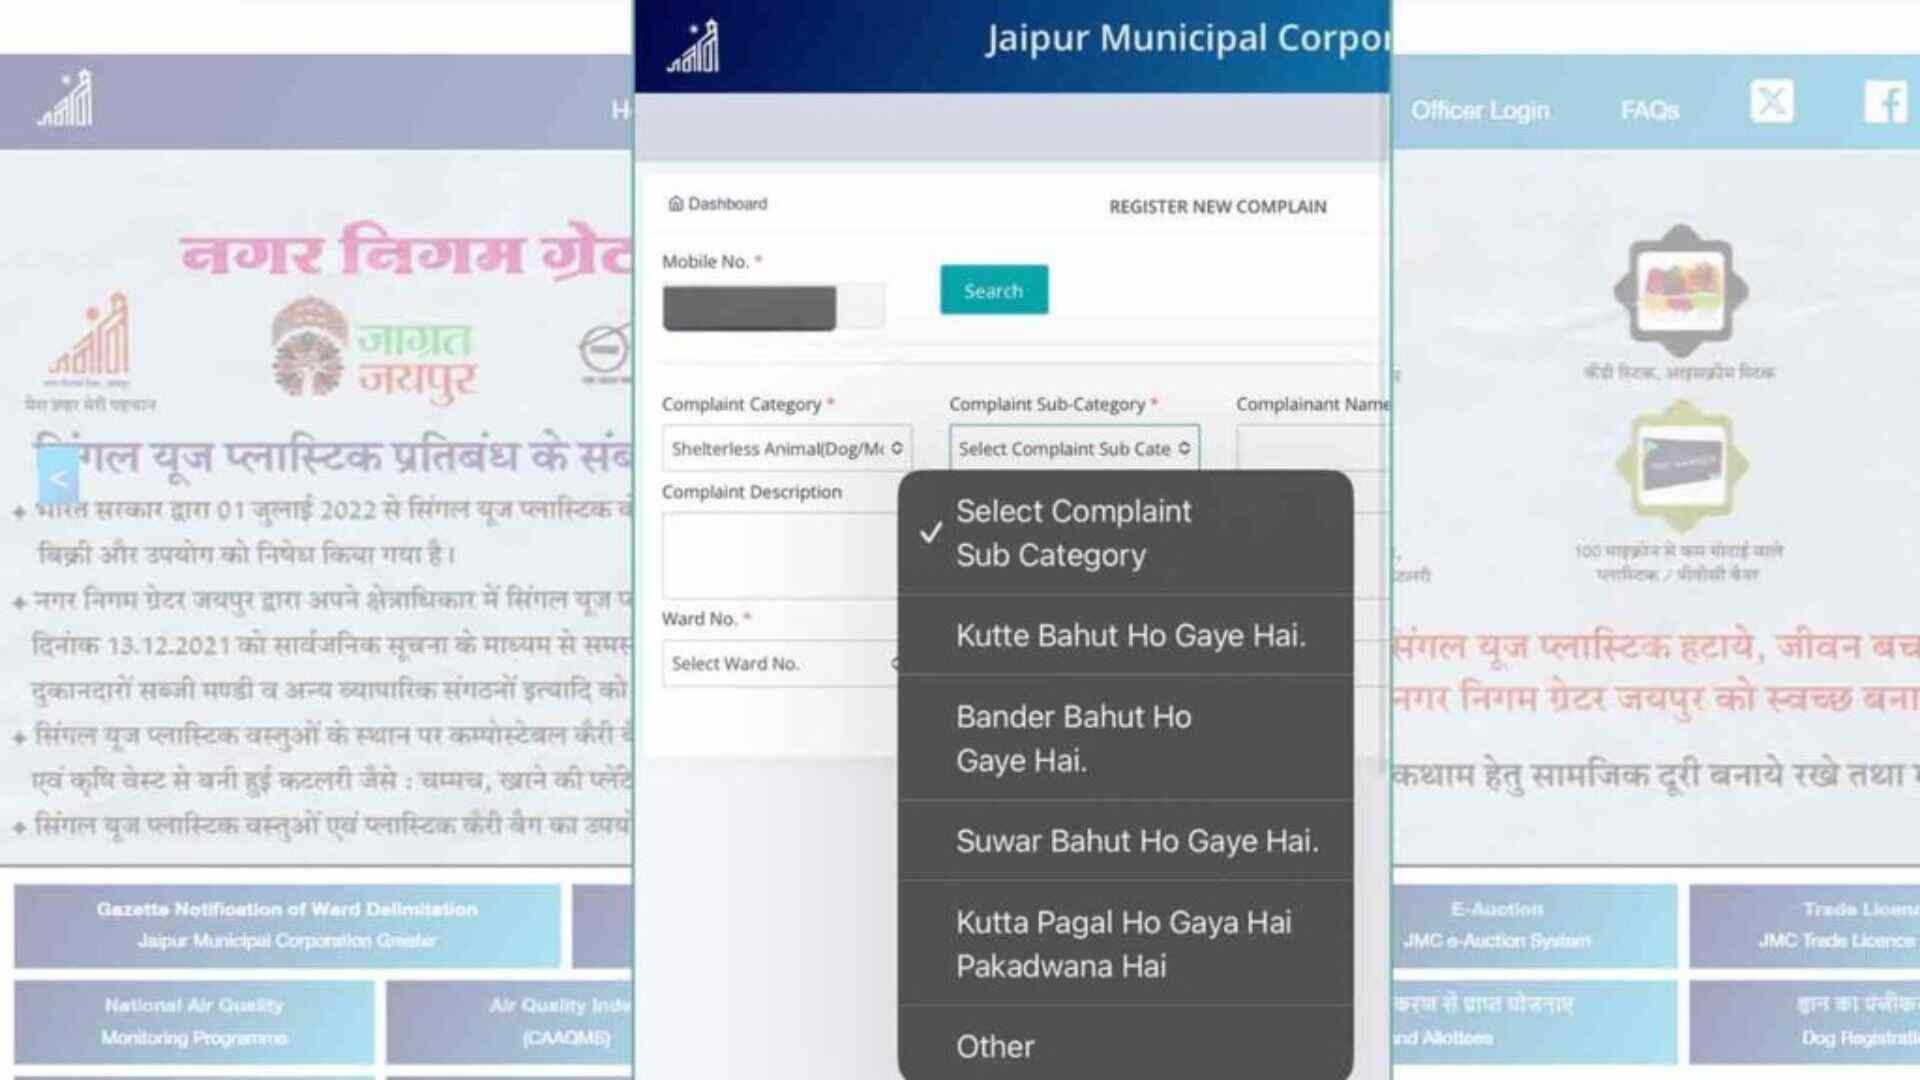 Jaipur: City’s Municipal Corporation Website Goes Viral On the Internet, Netizens Laugh